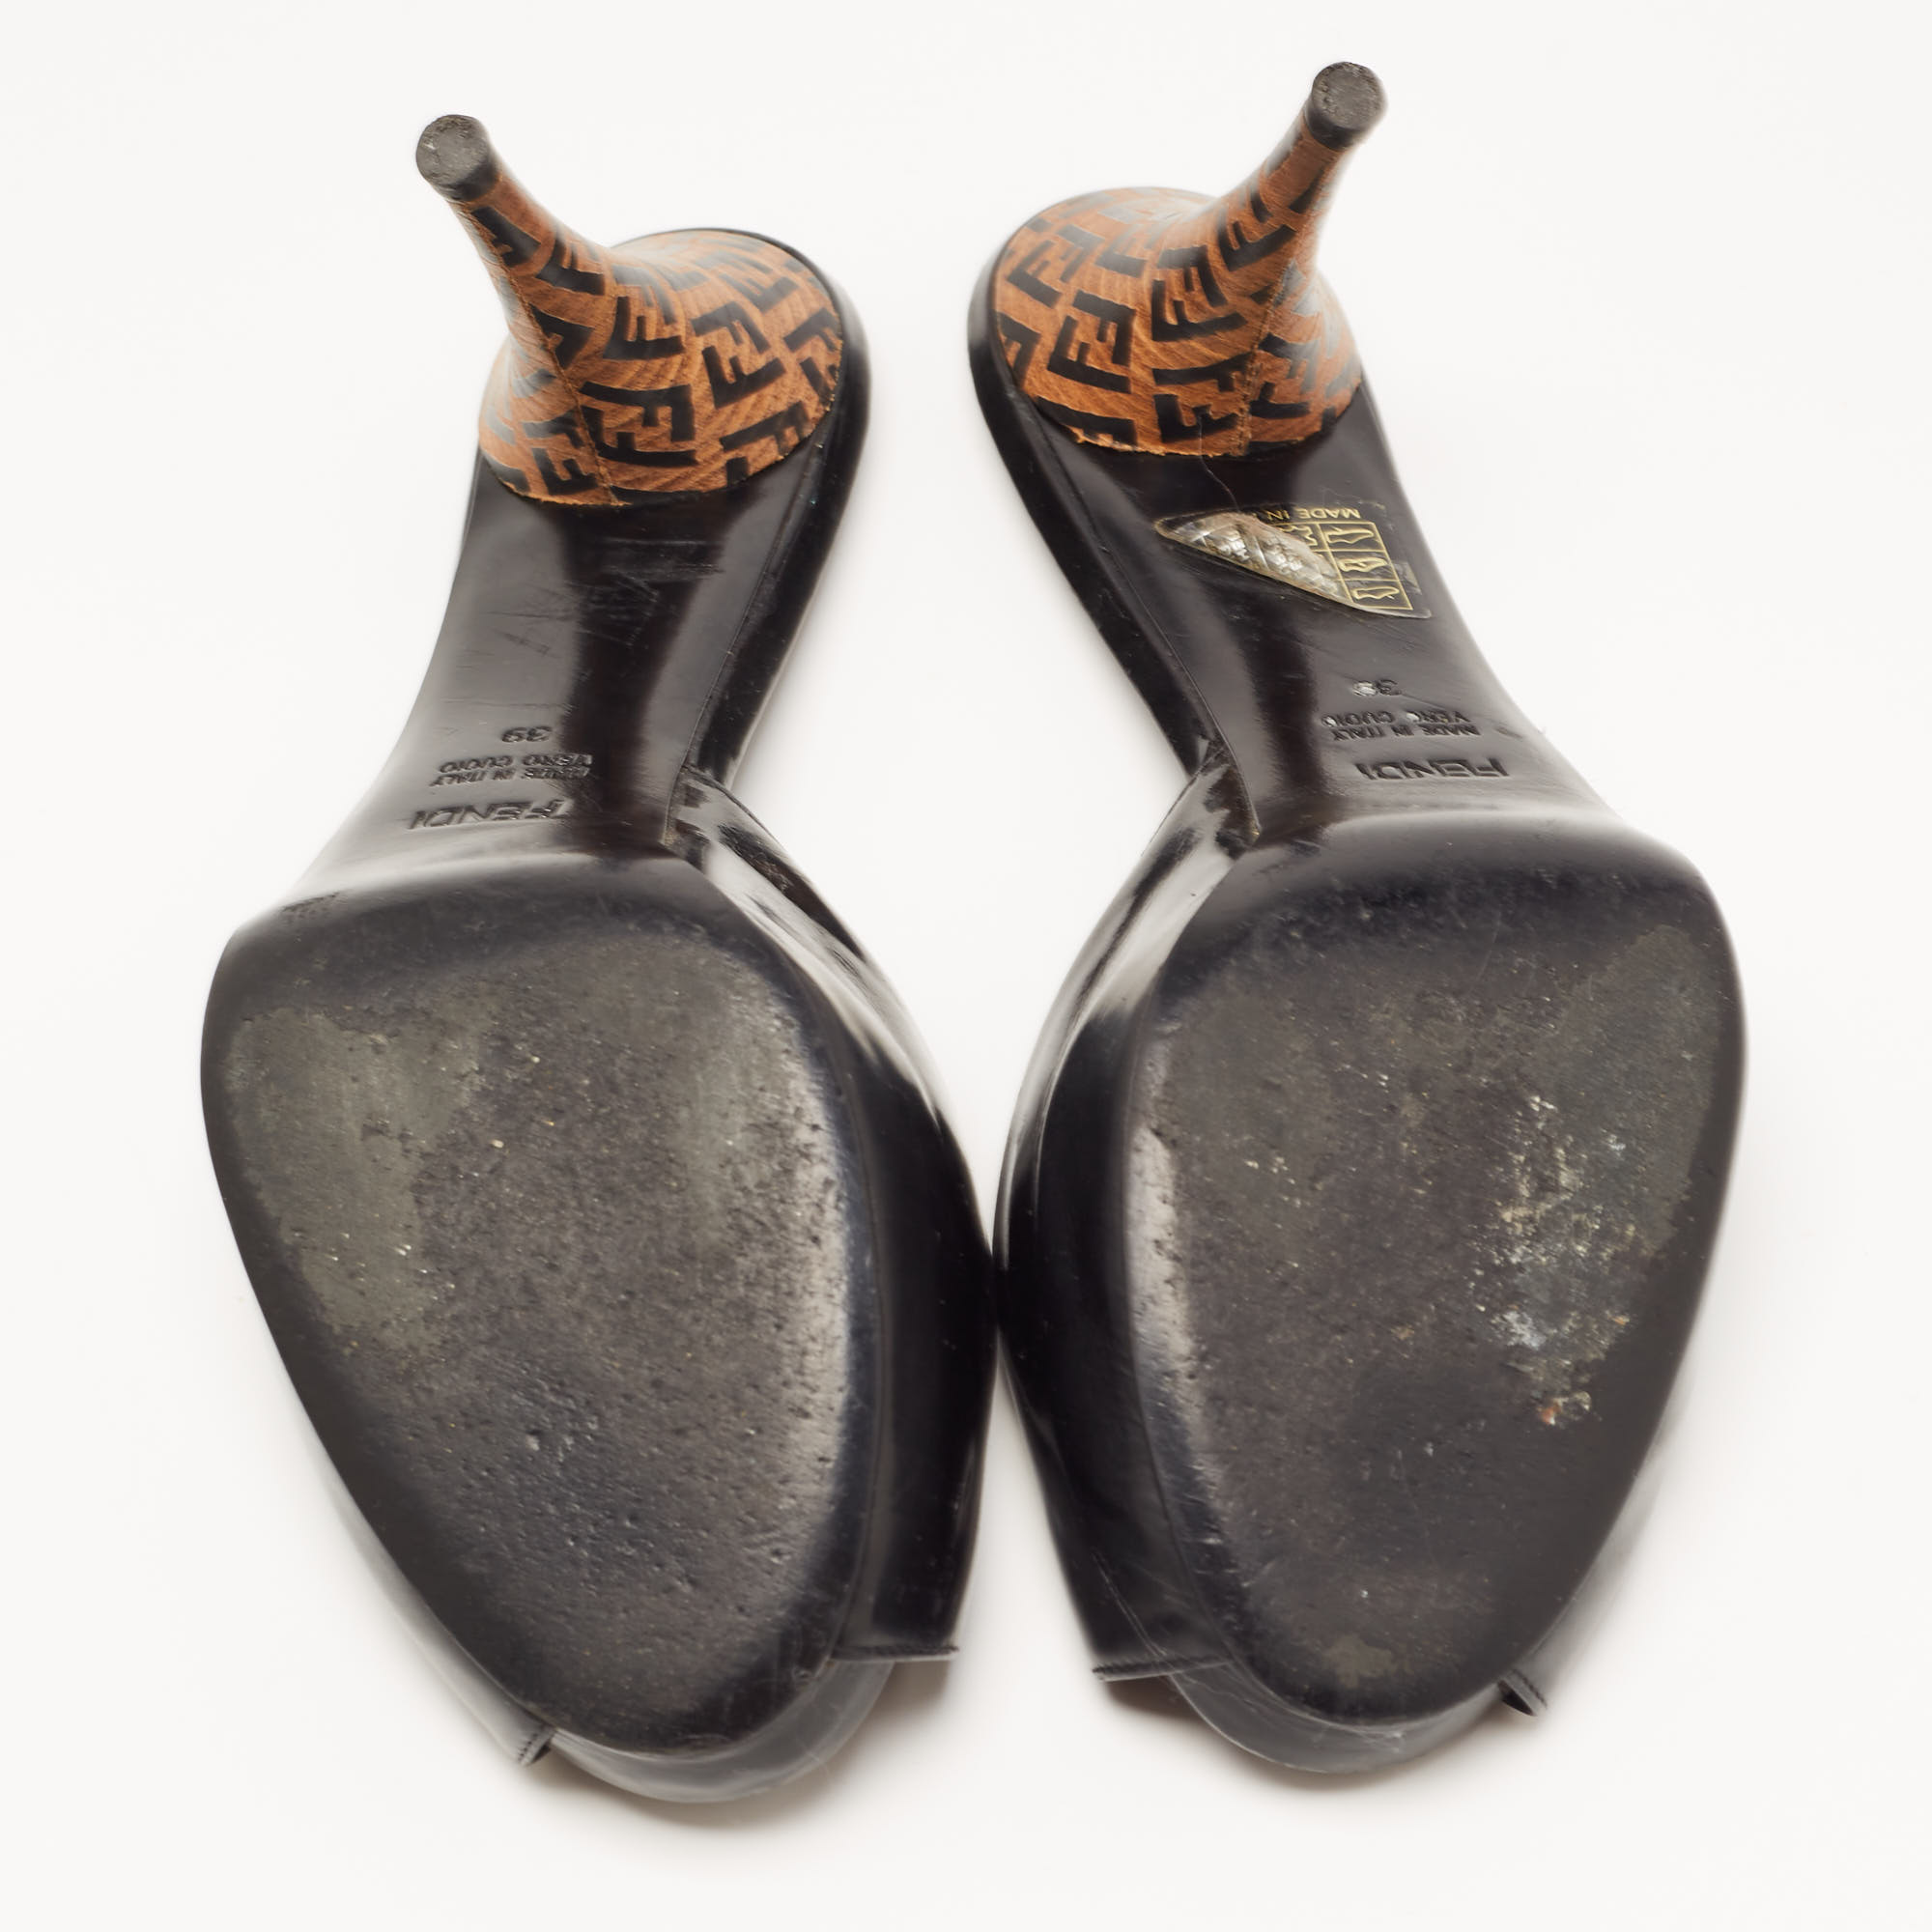 Fendi Black Patent Leather Peep Toe Platform Slide Sandals Size 39